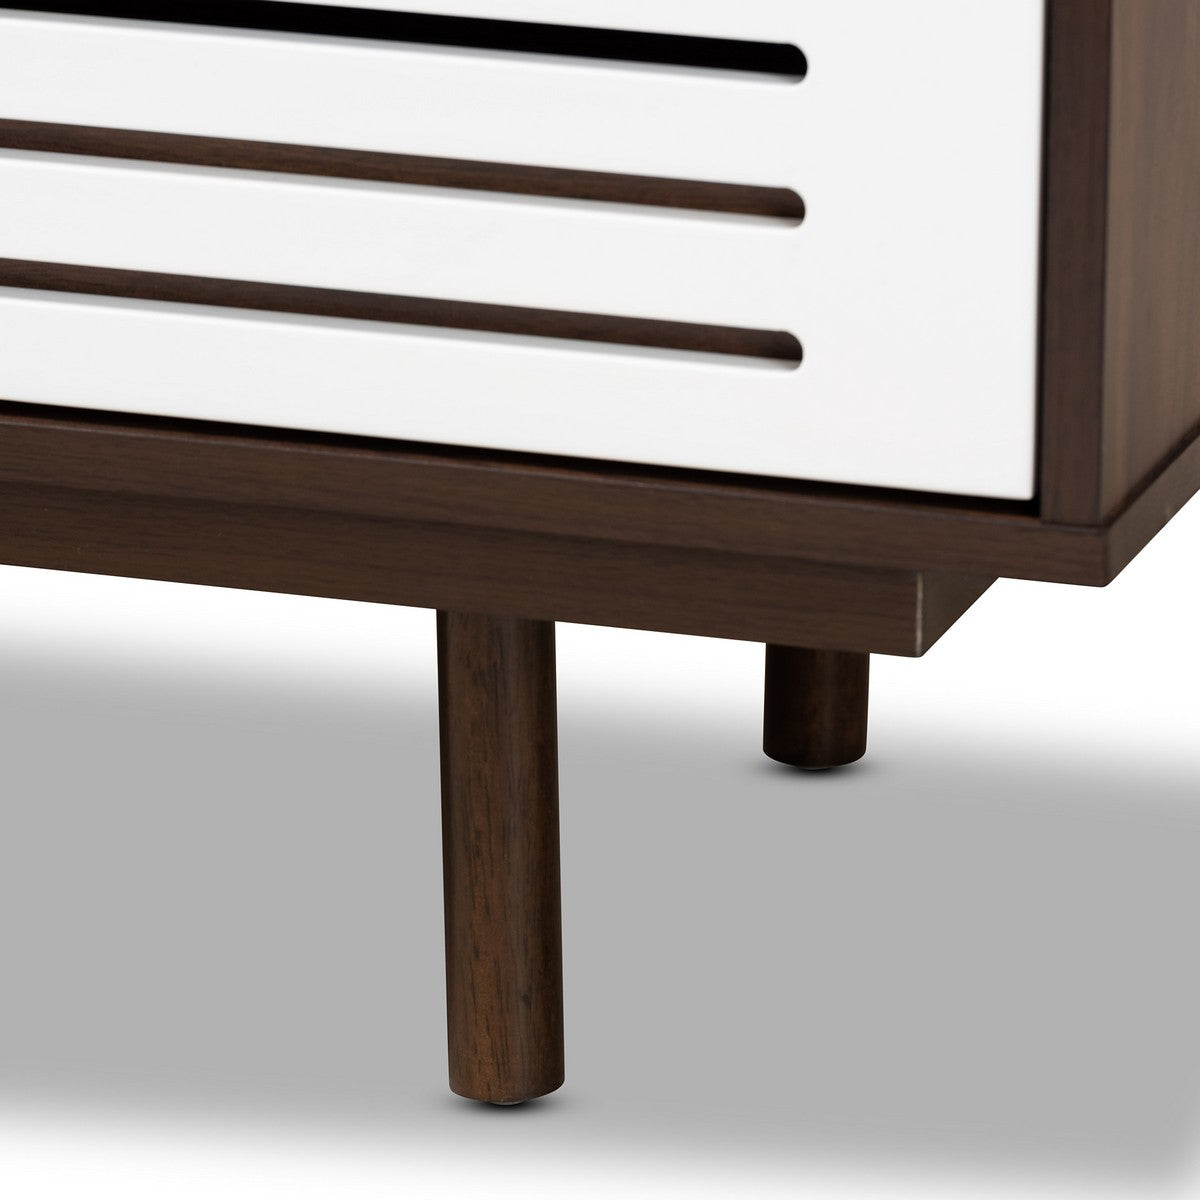 Baxton Studio Meike Mid-Century Modern Two-Tone Walnut Brown and White Finished Wood 6-Drawer Dresser